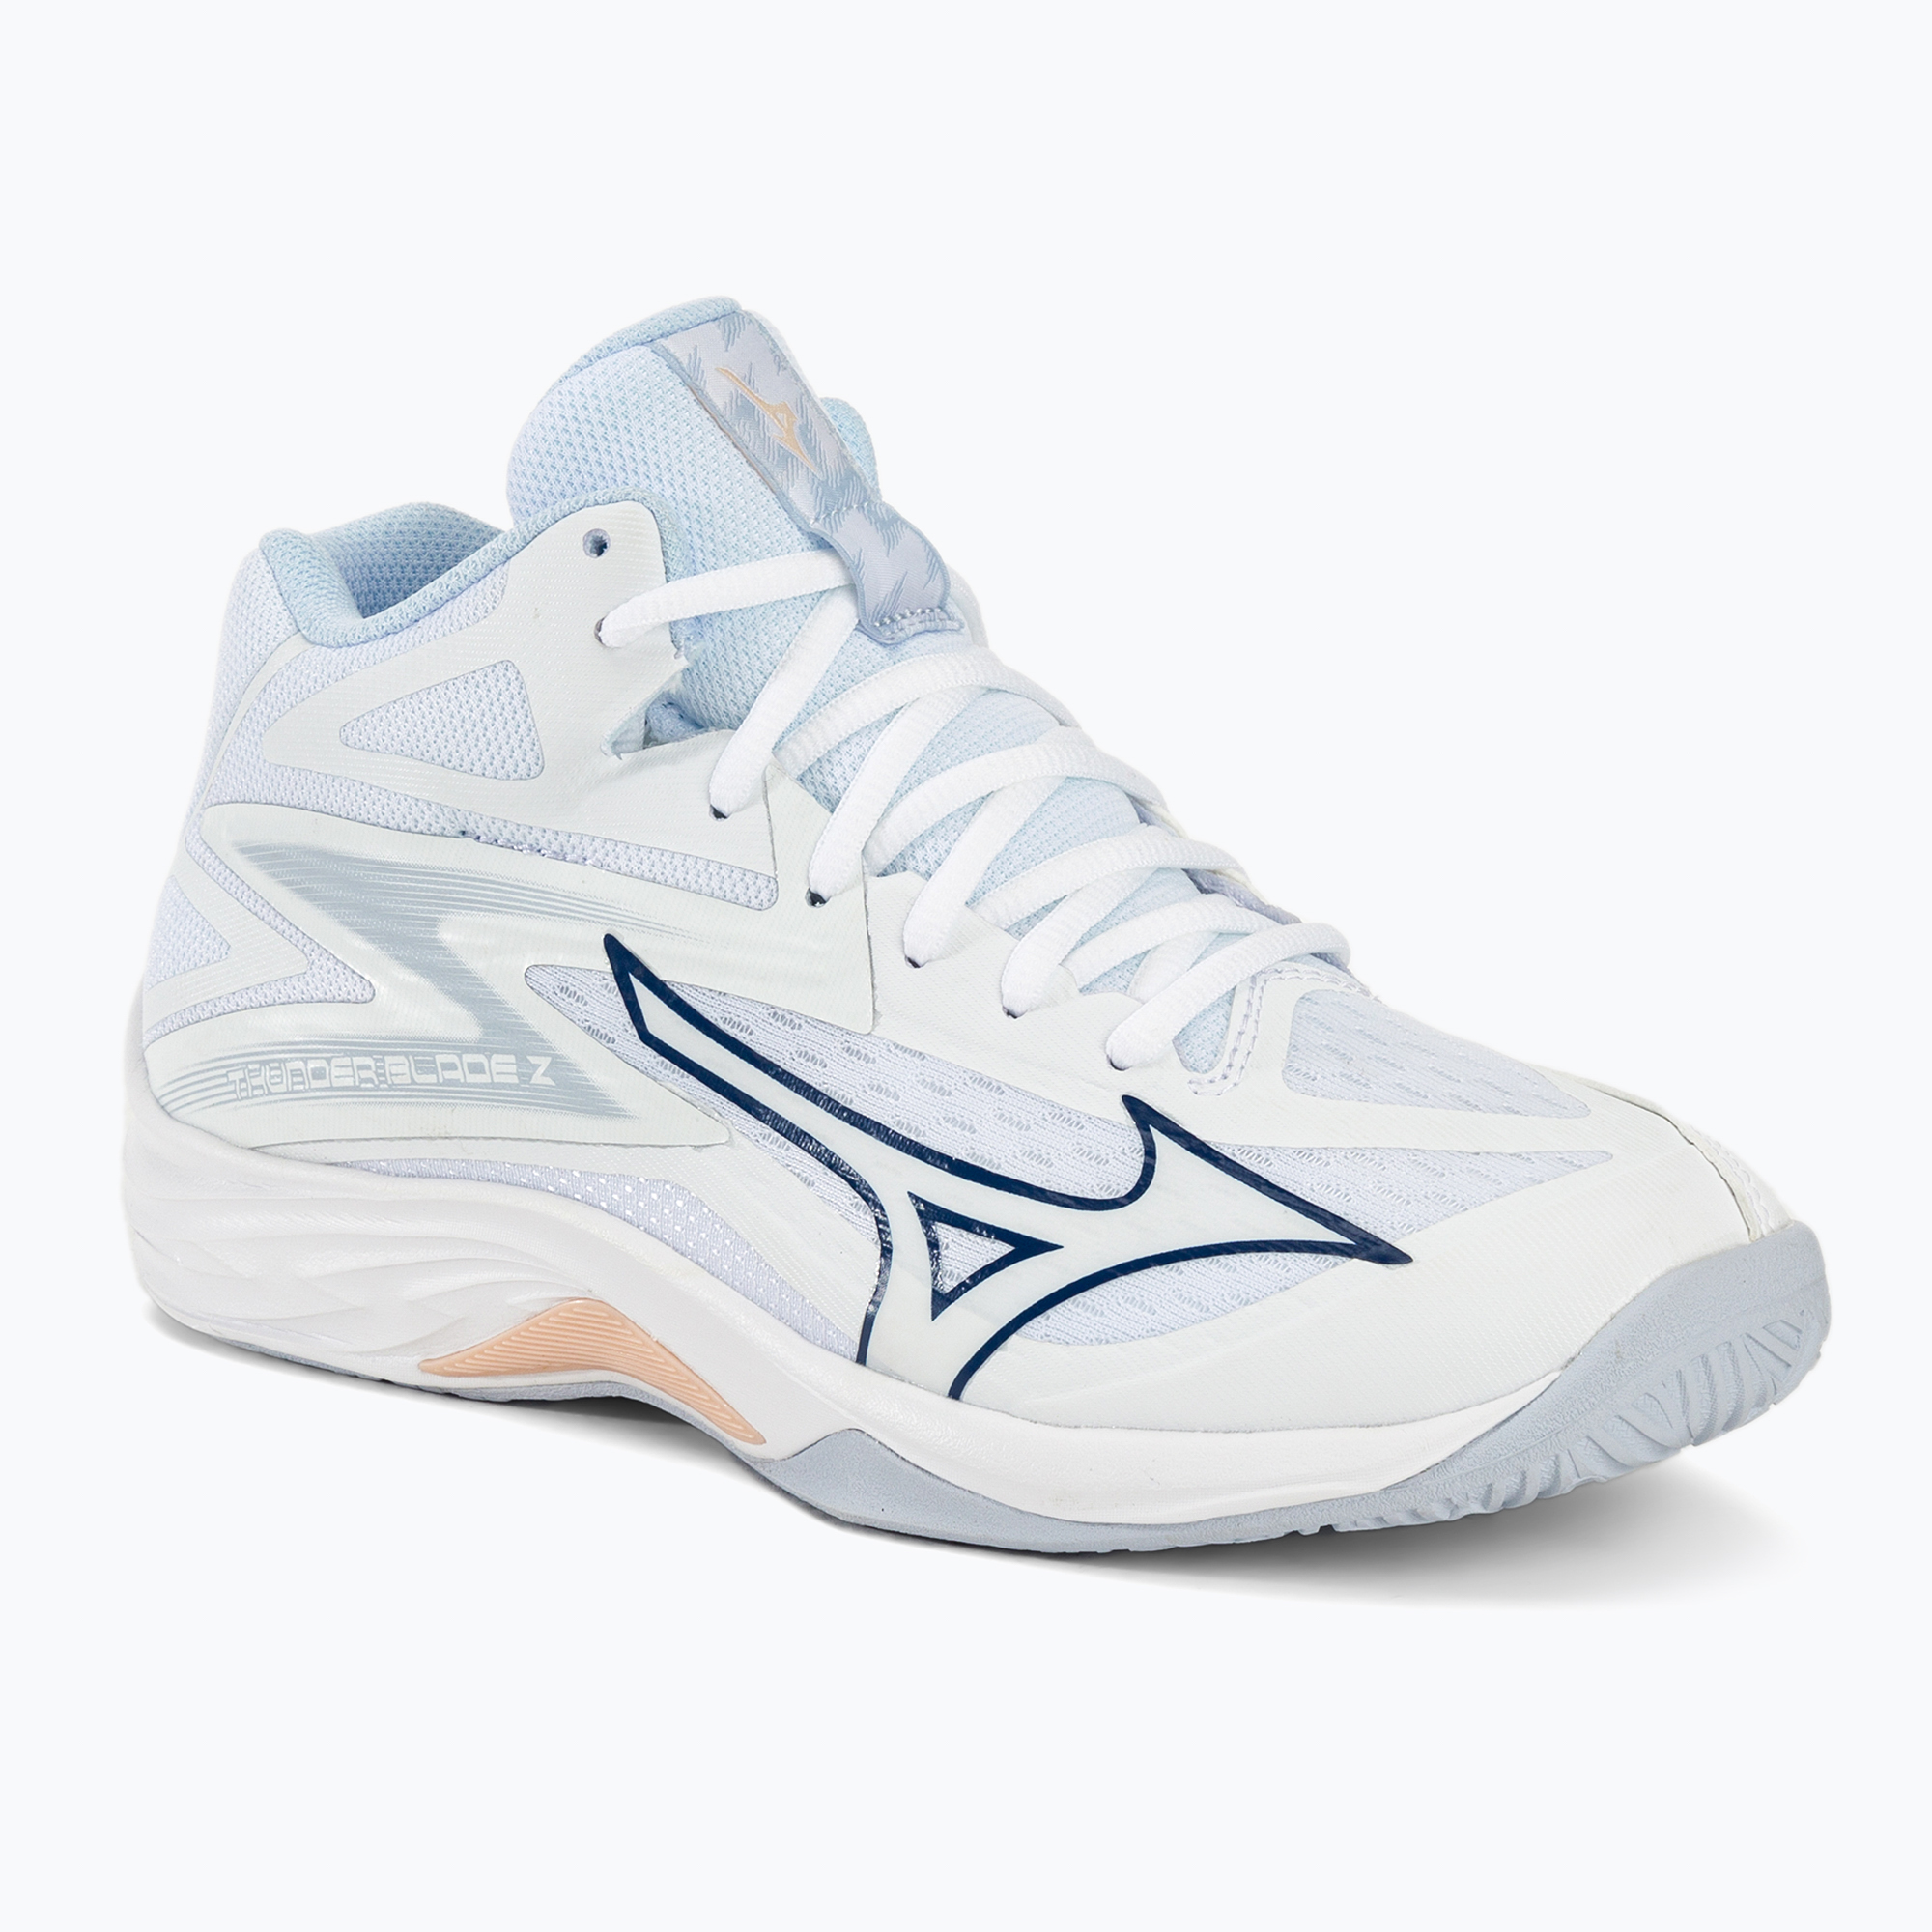 Дамски обувки за волейбол Mizuno Thunder Blade Z Mid white/navy peony/peach parfait